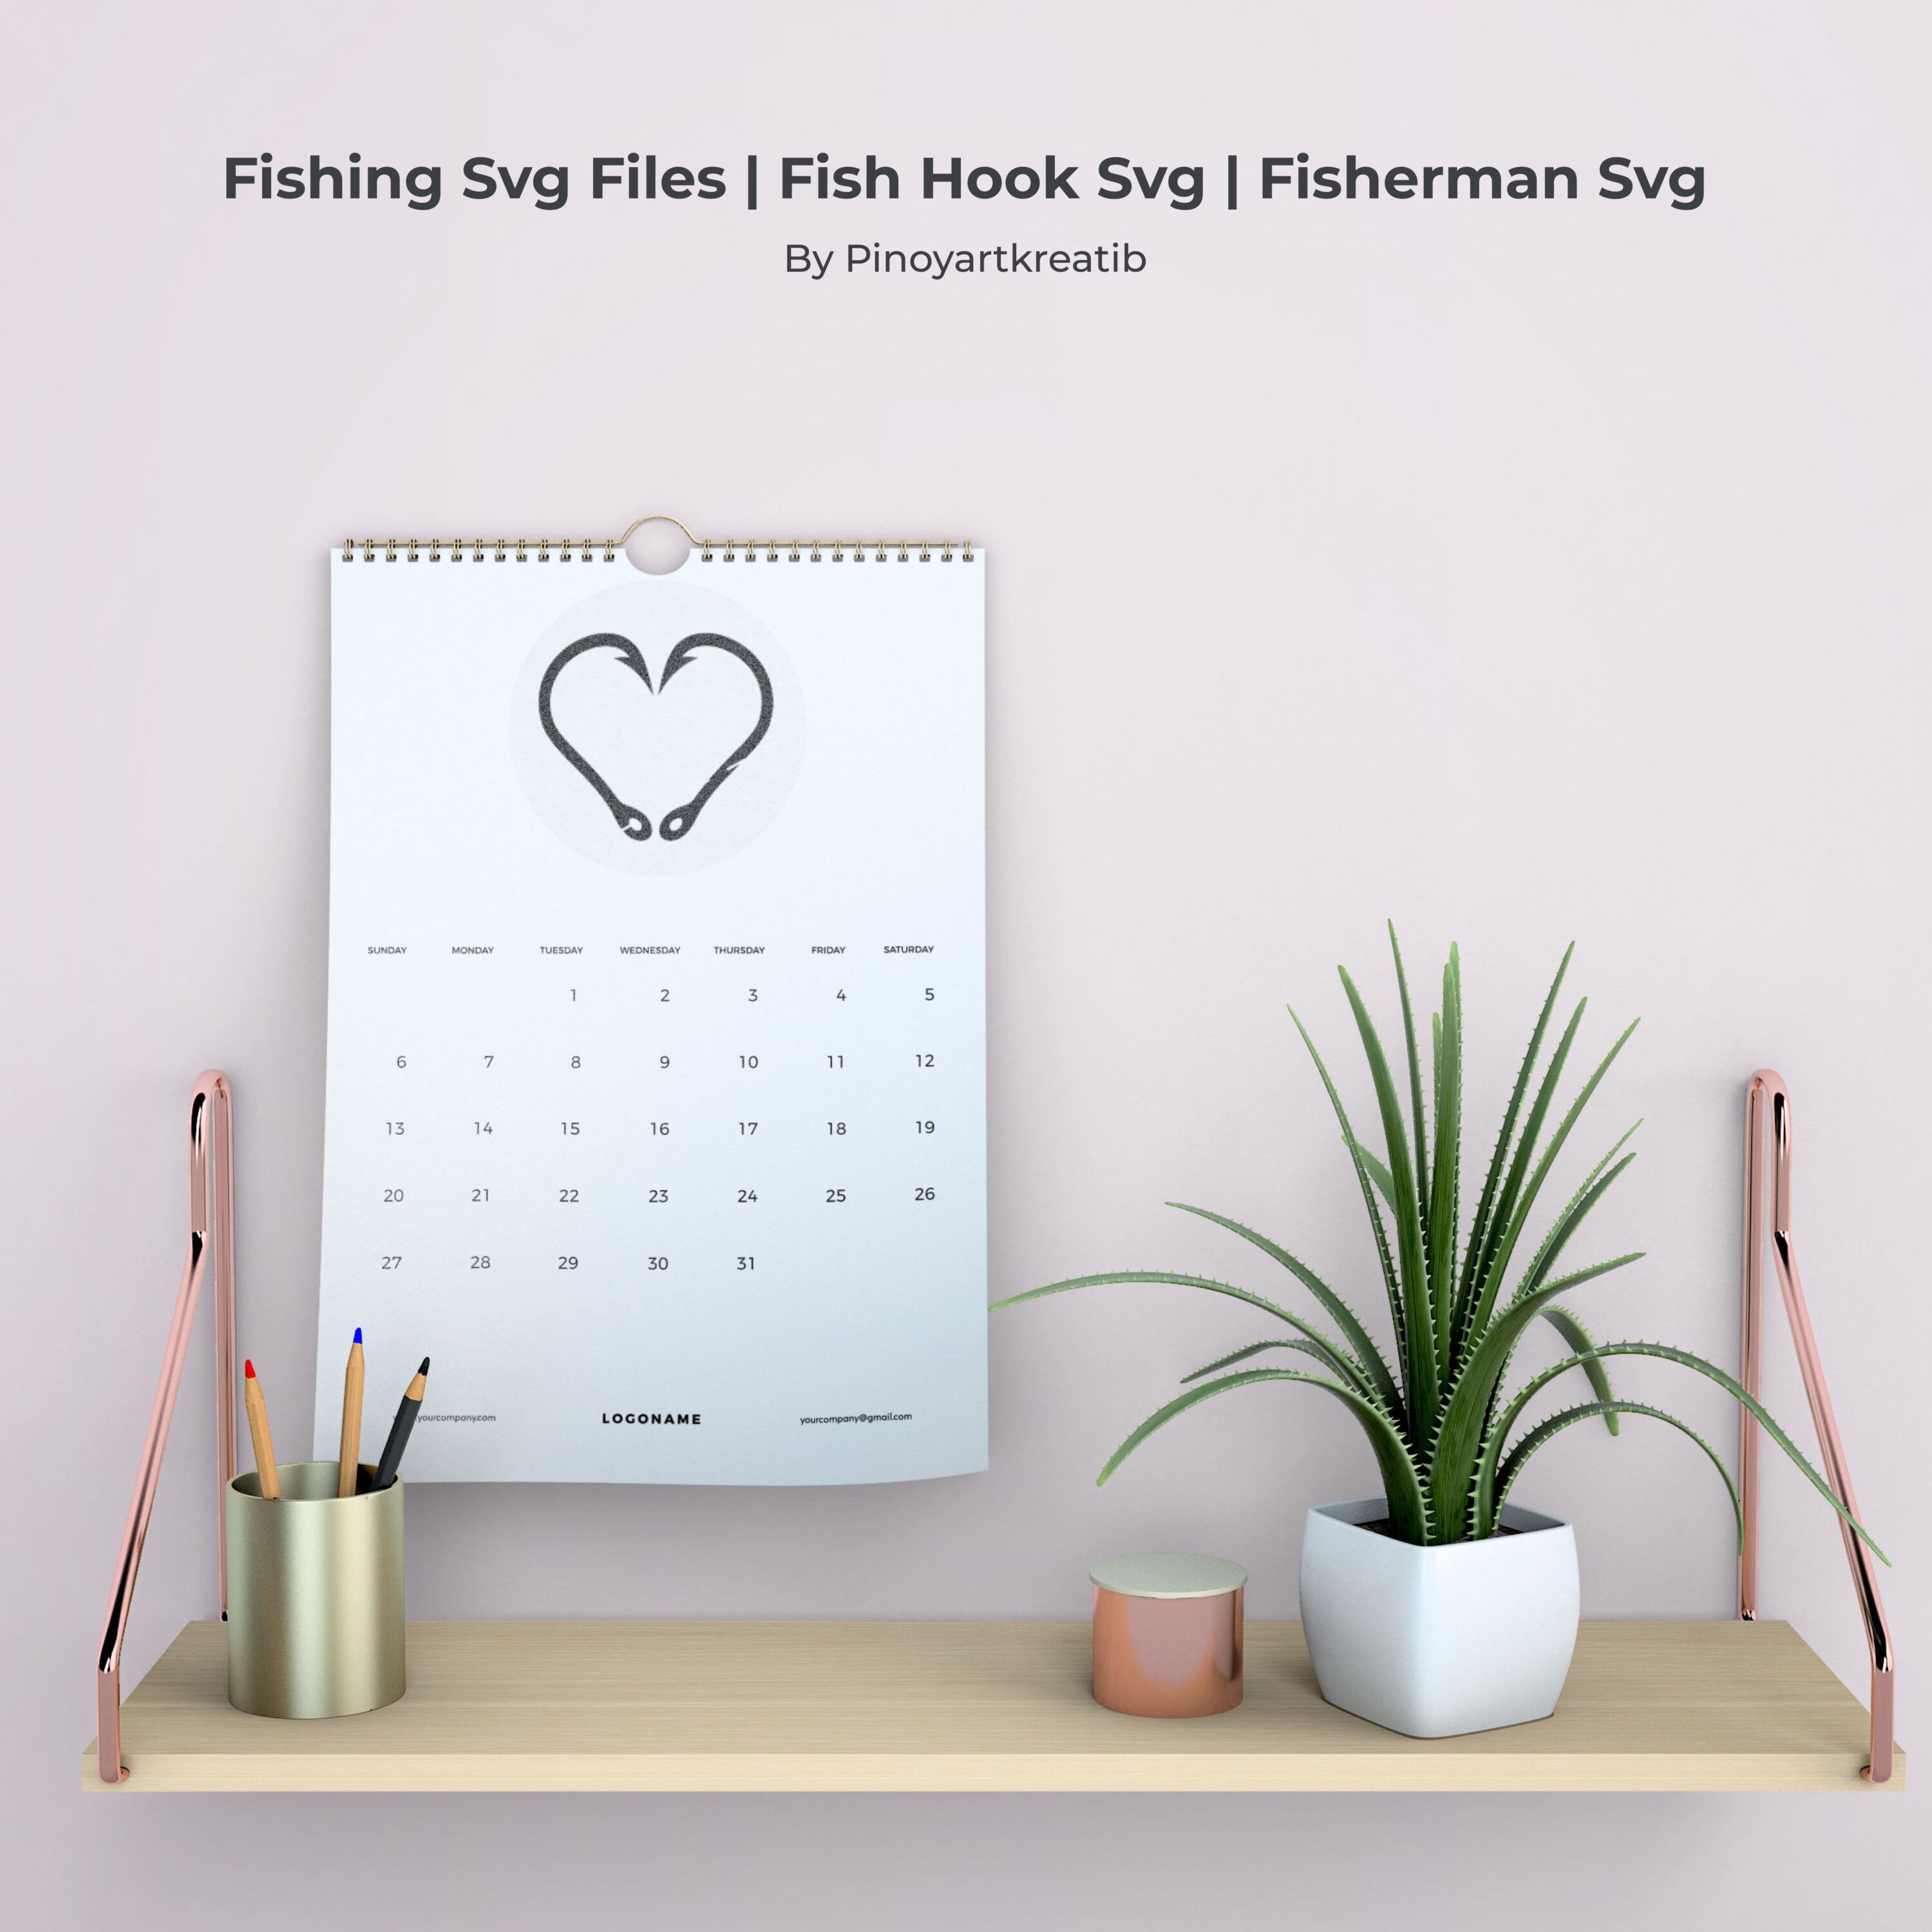 Fishing Svg Files | Fish Hook Svg | Fisherman Svg cover.